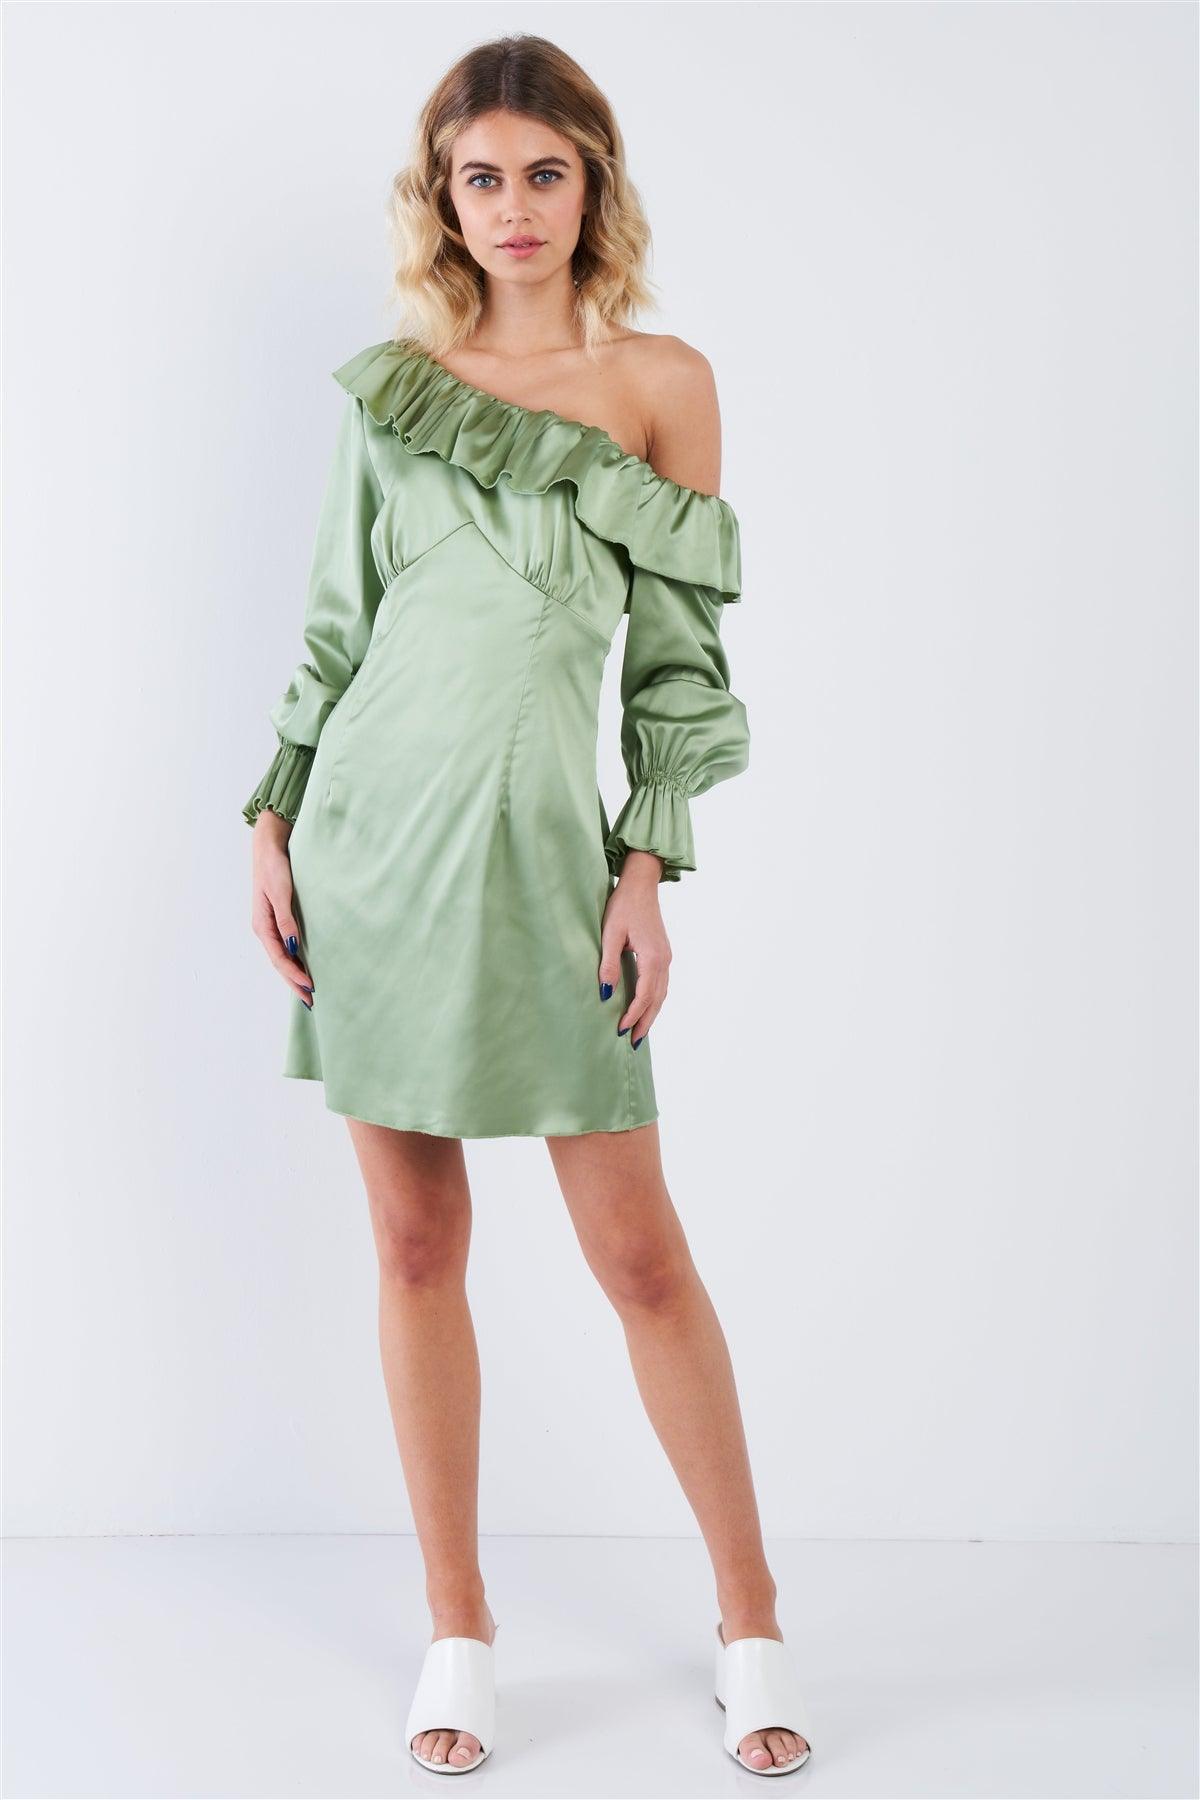 Silk Sage Green Vintage One Shoulder Ruffle Trim Mini Dress